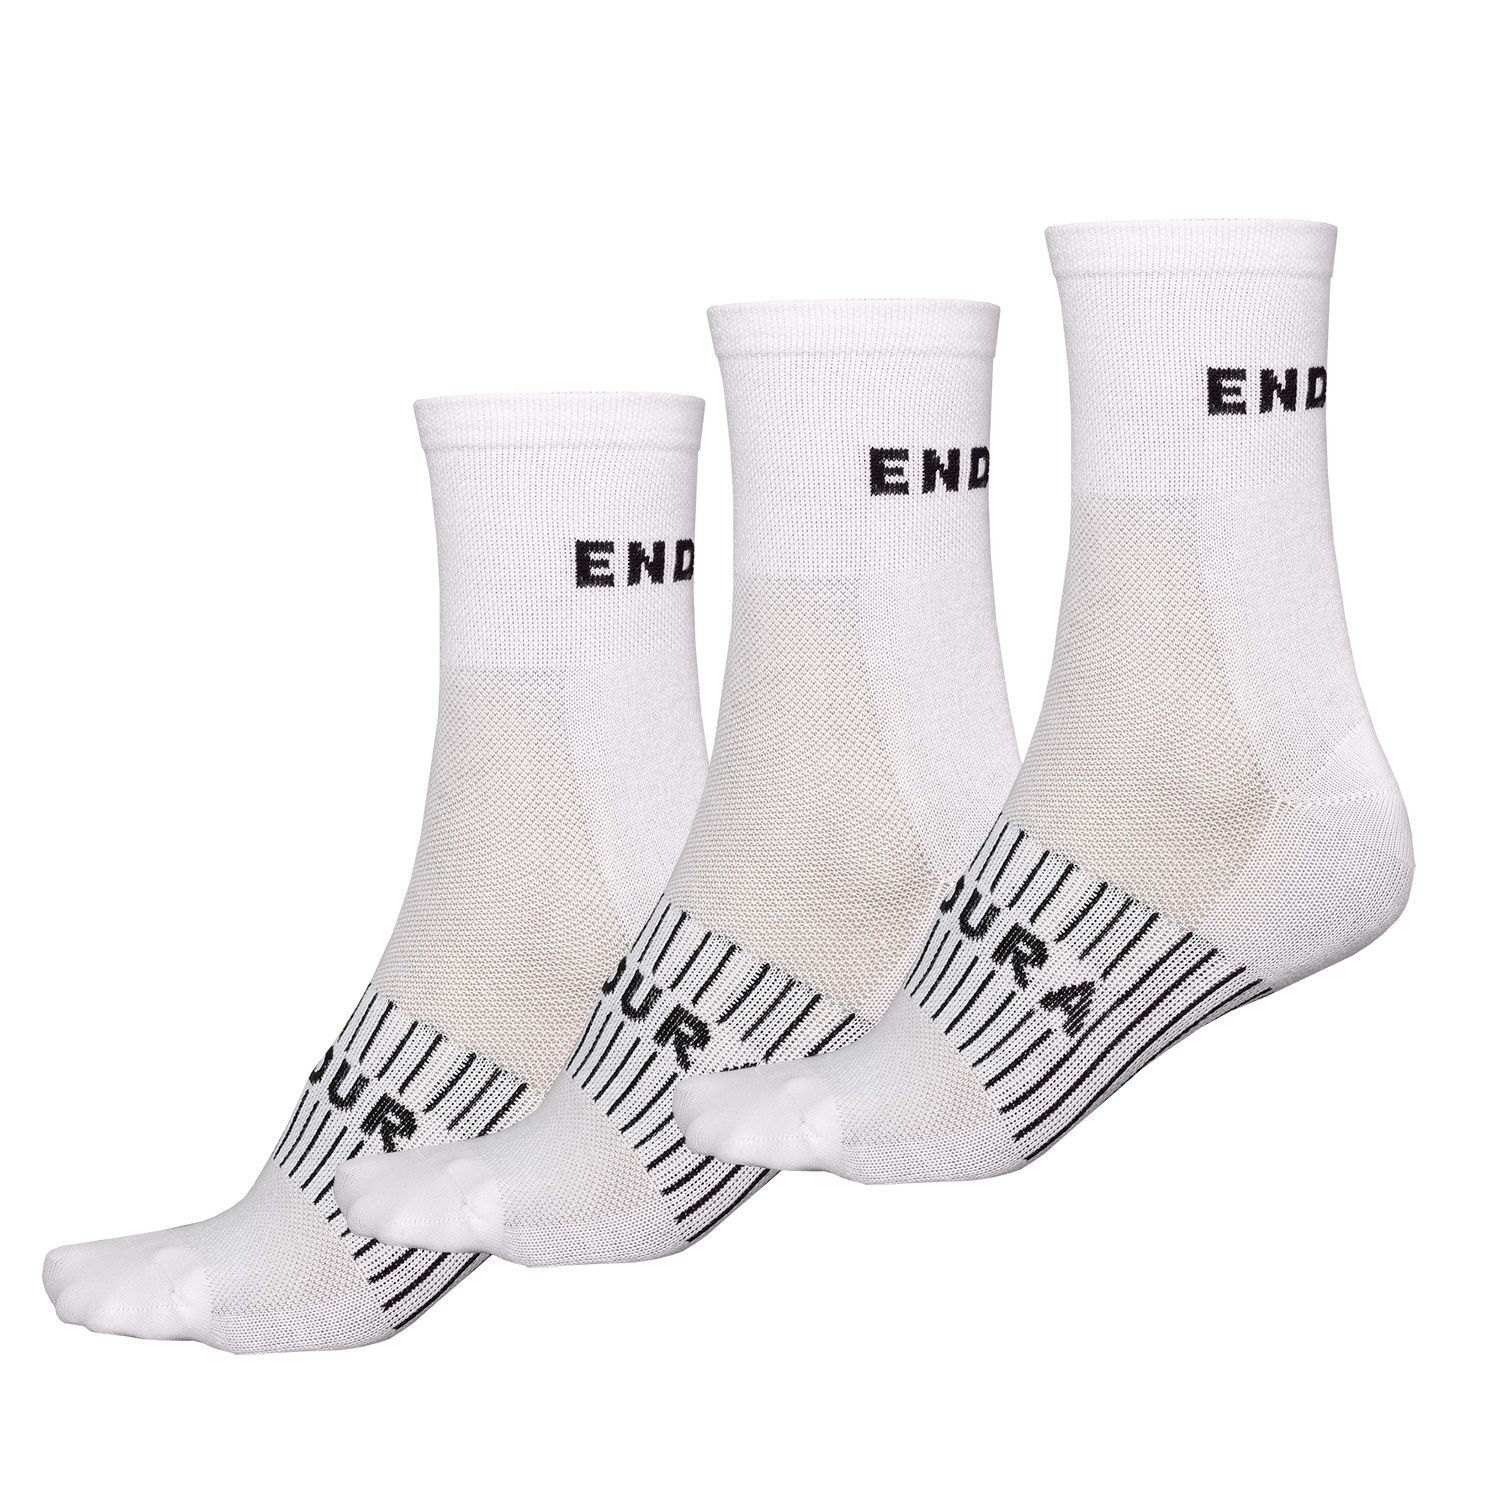 Endura Coolmax Race Sock (Triple Pack) - Calze ciclismo - Uomo